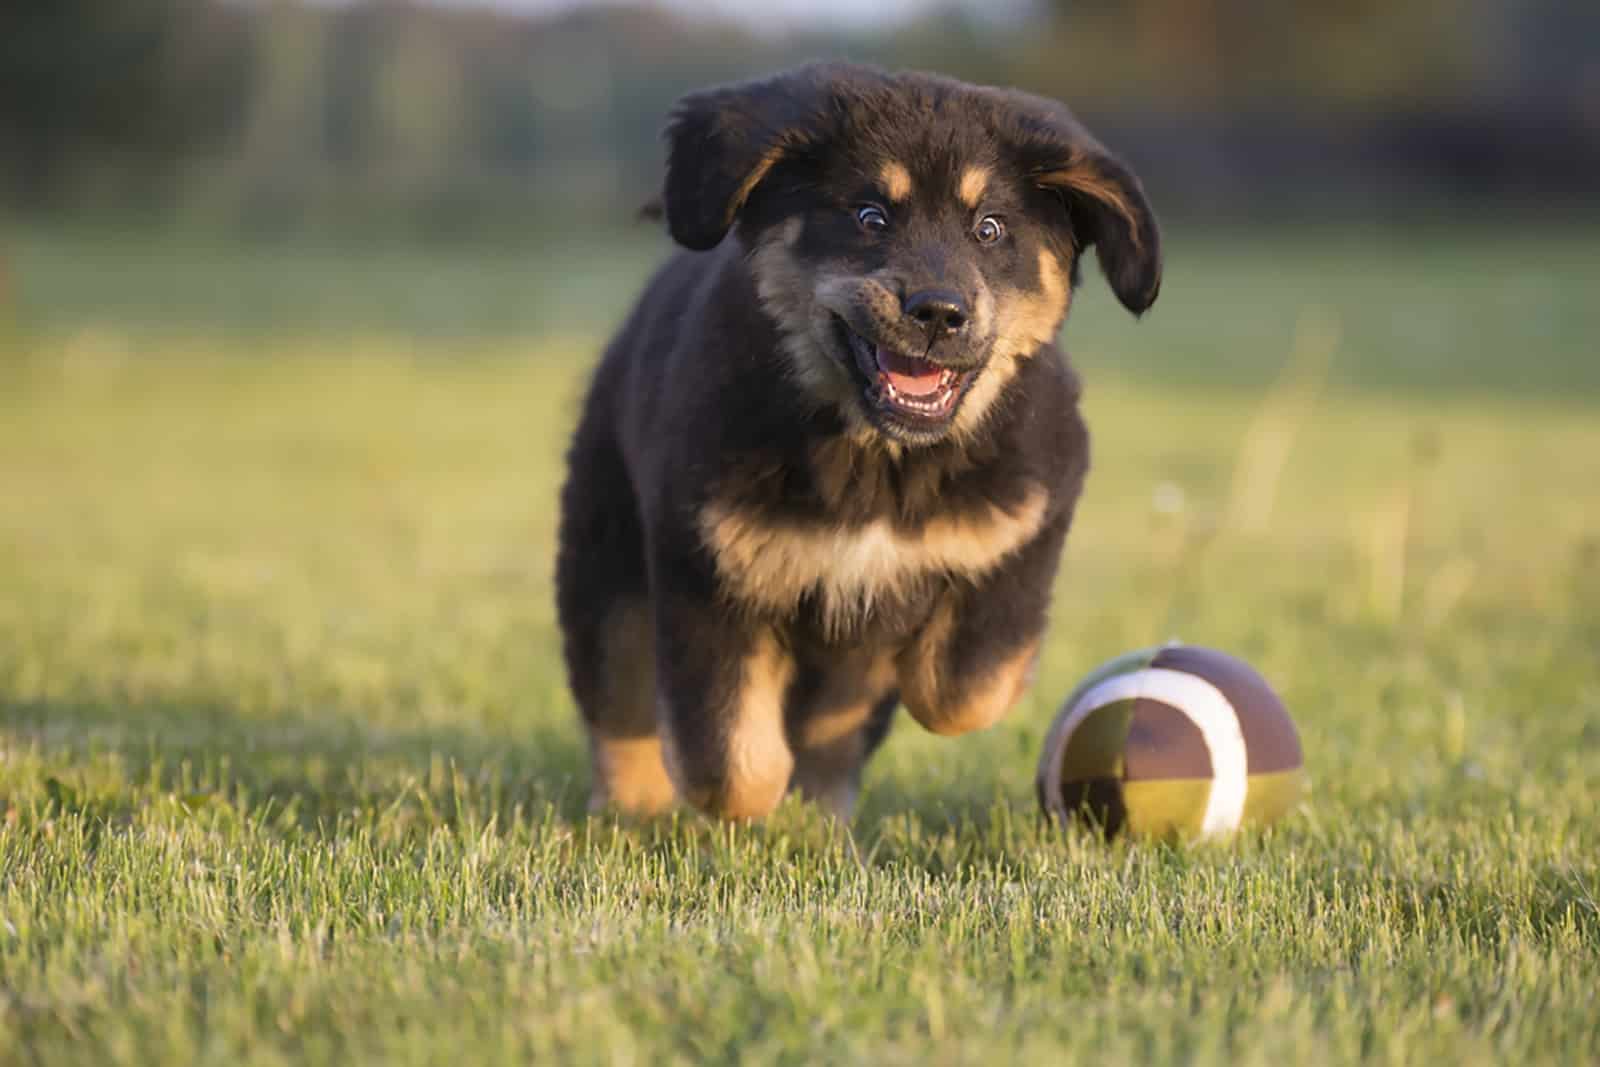 tibetan mastiff puppy playing with football ball